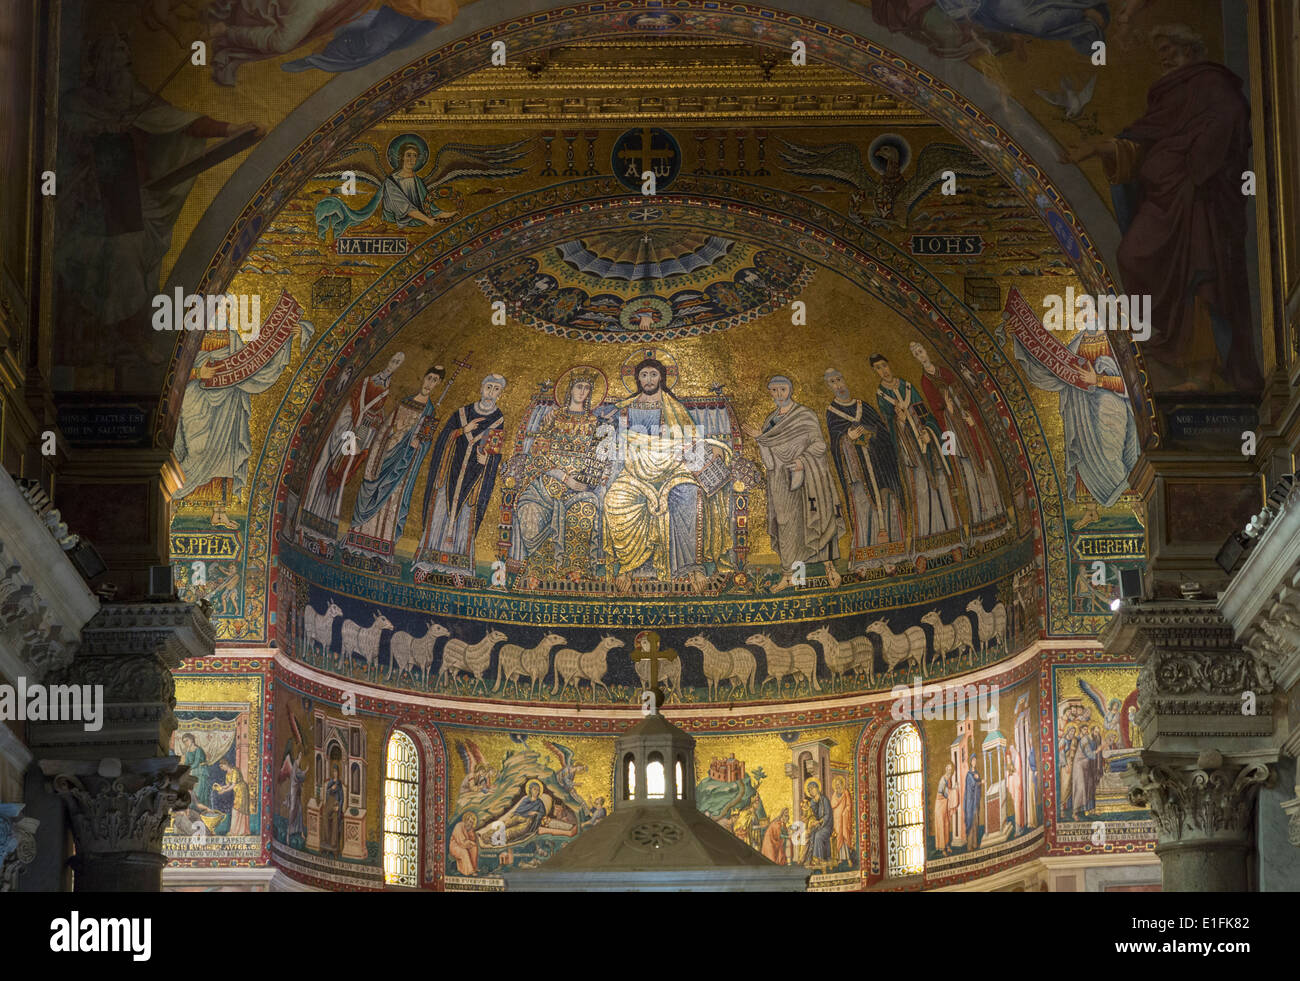 Rom, Italien. Basilica di Santa Maria in Trastevere. 12. Jahrhundert Mosaiken in der Apsis. Stockfoto